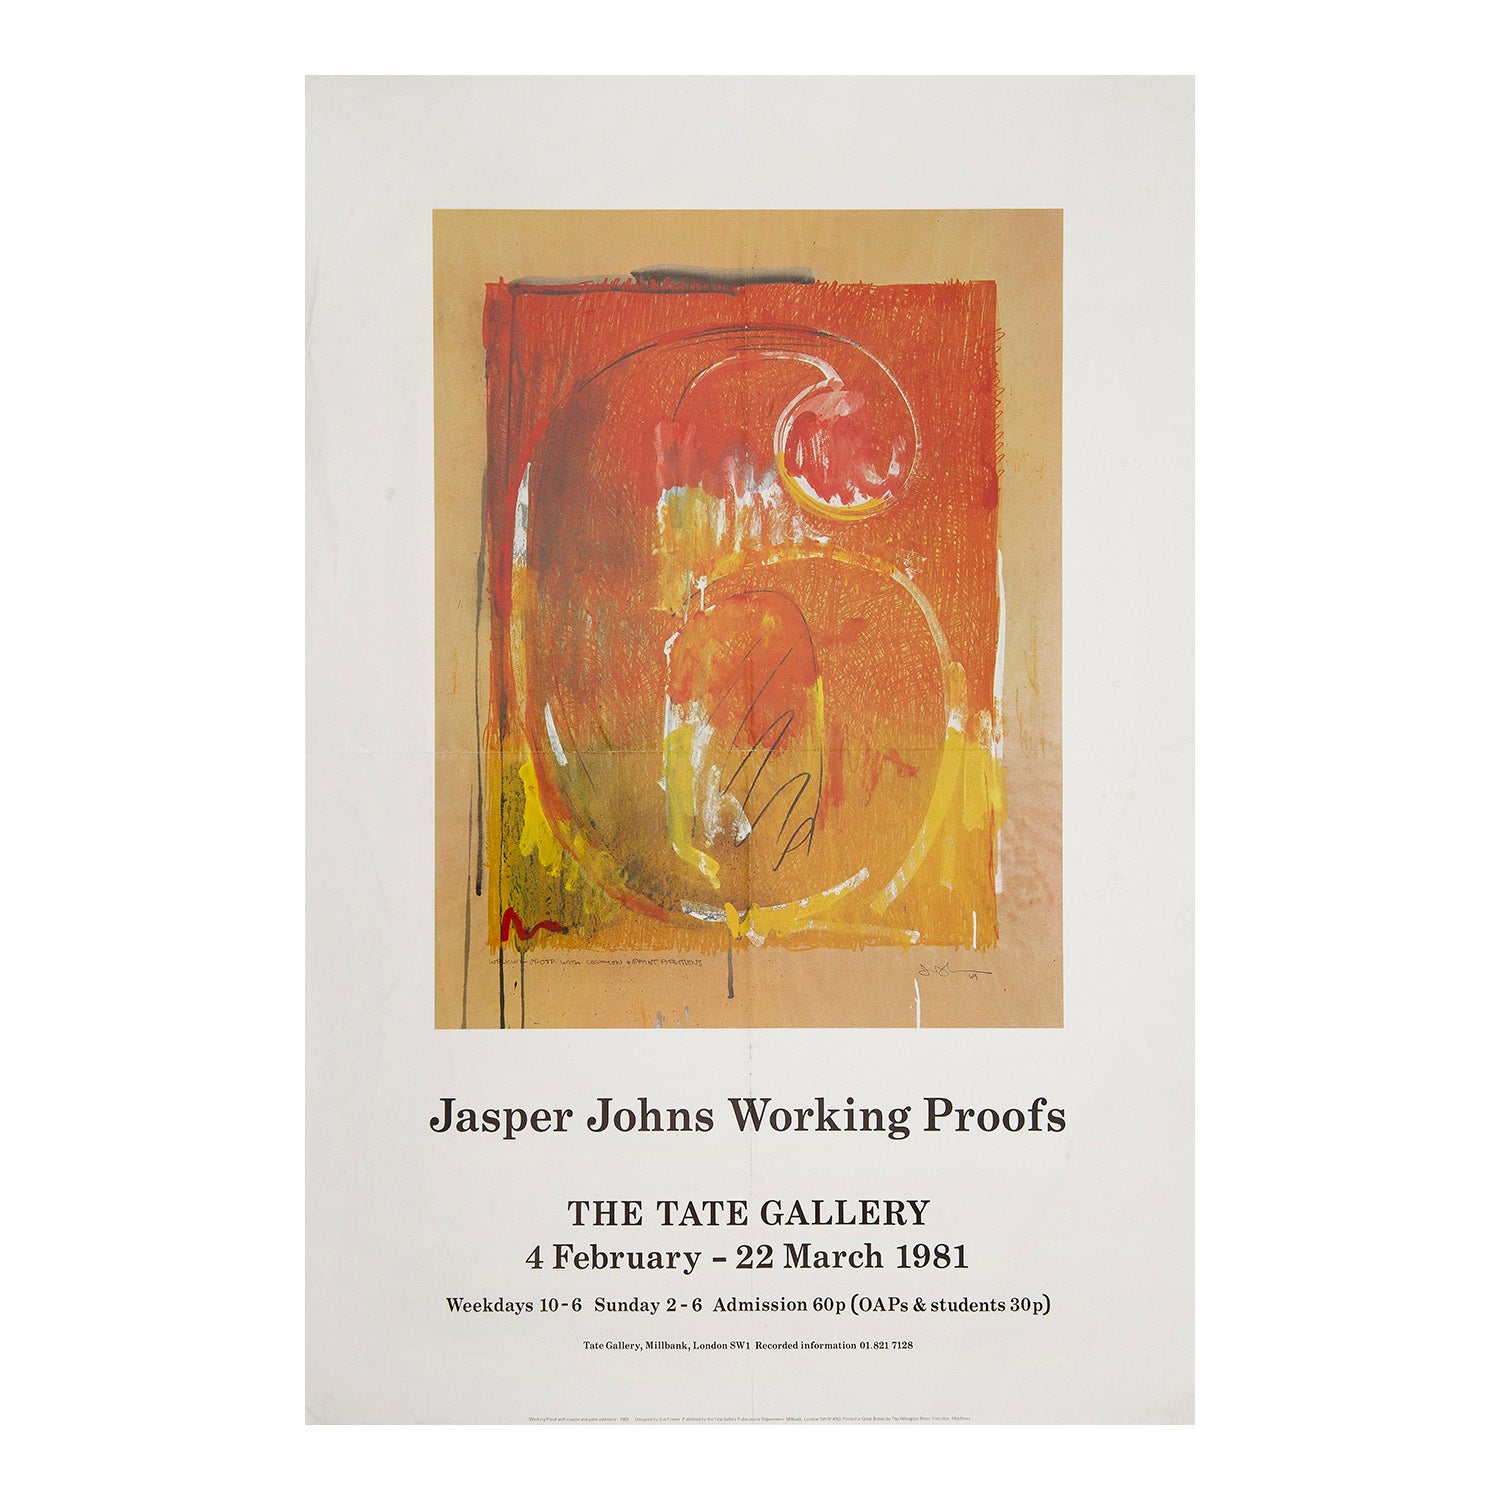 Jasper Johns Working Proofs